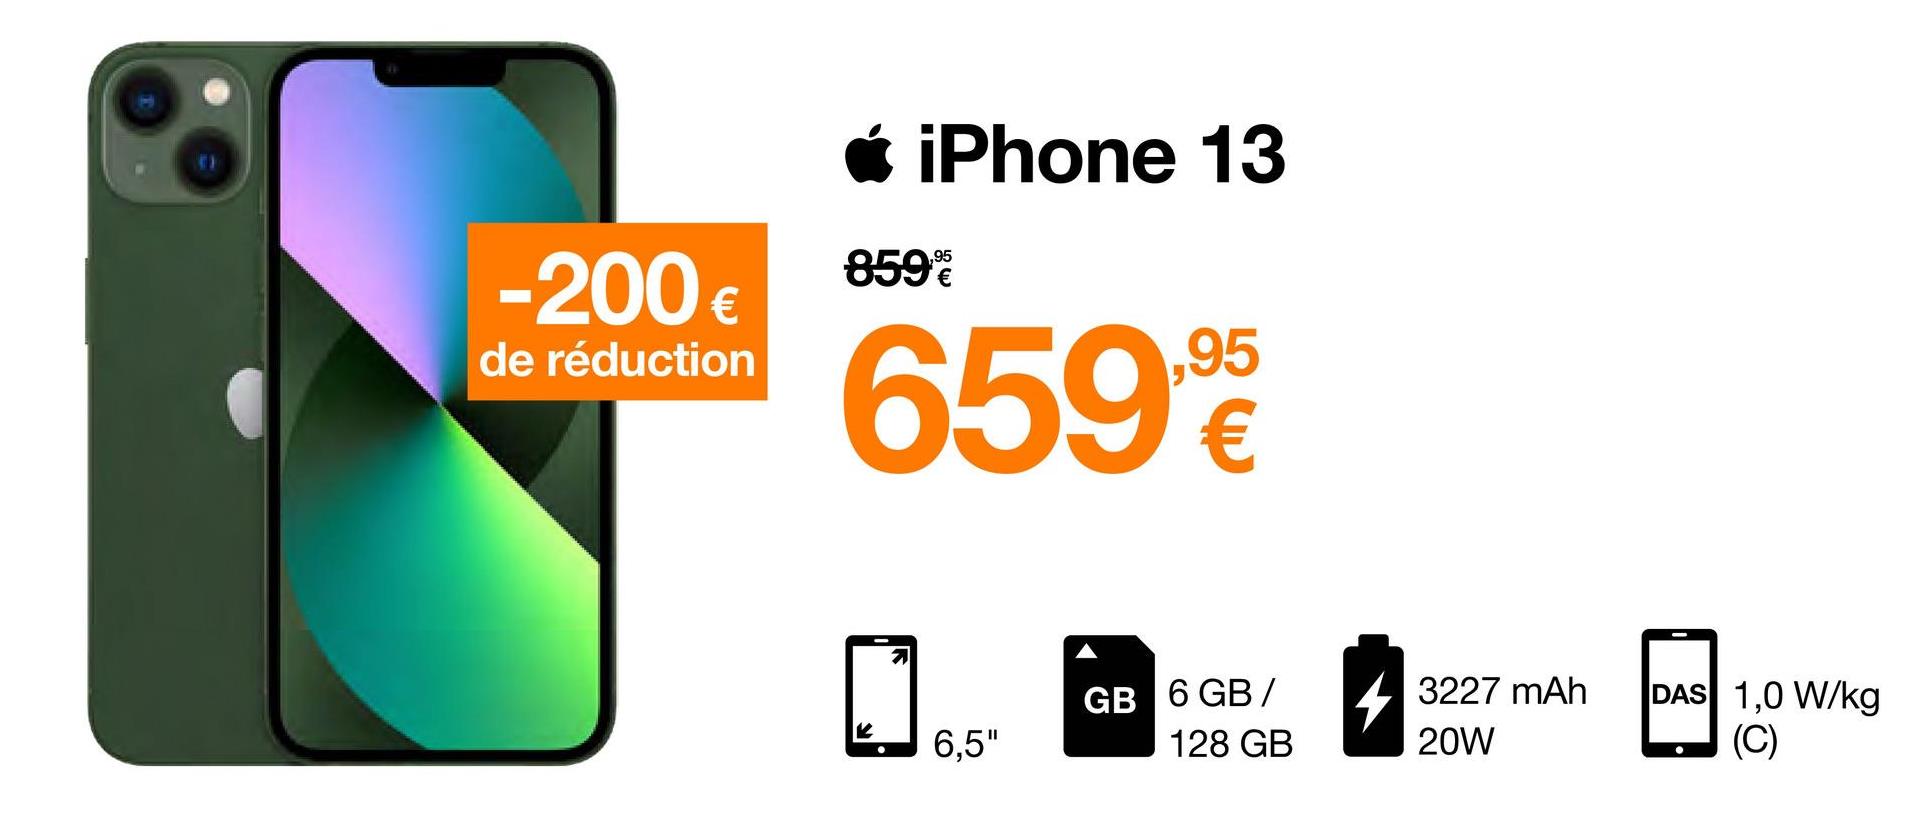 -200 €
de réduction
iPhone 13
859%
659,90
7
6,5"
GB 6 GB/
128 GB
3227 mAh
20W
DAS 1,0 W/kg
(C)